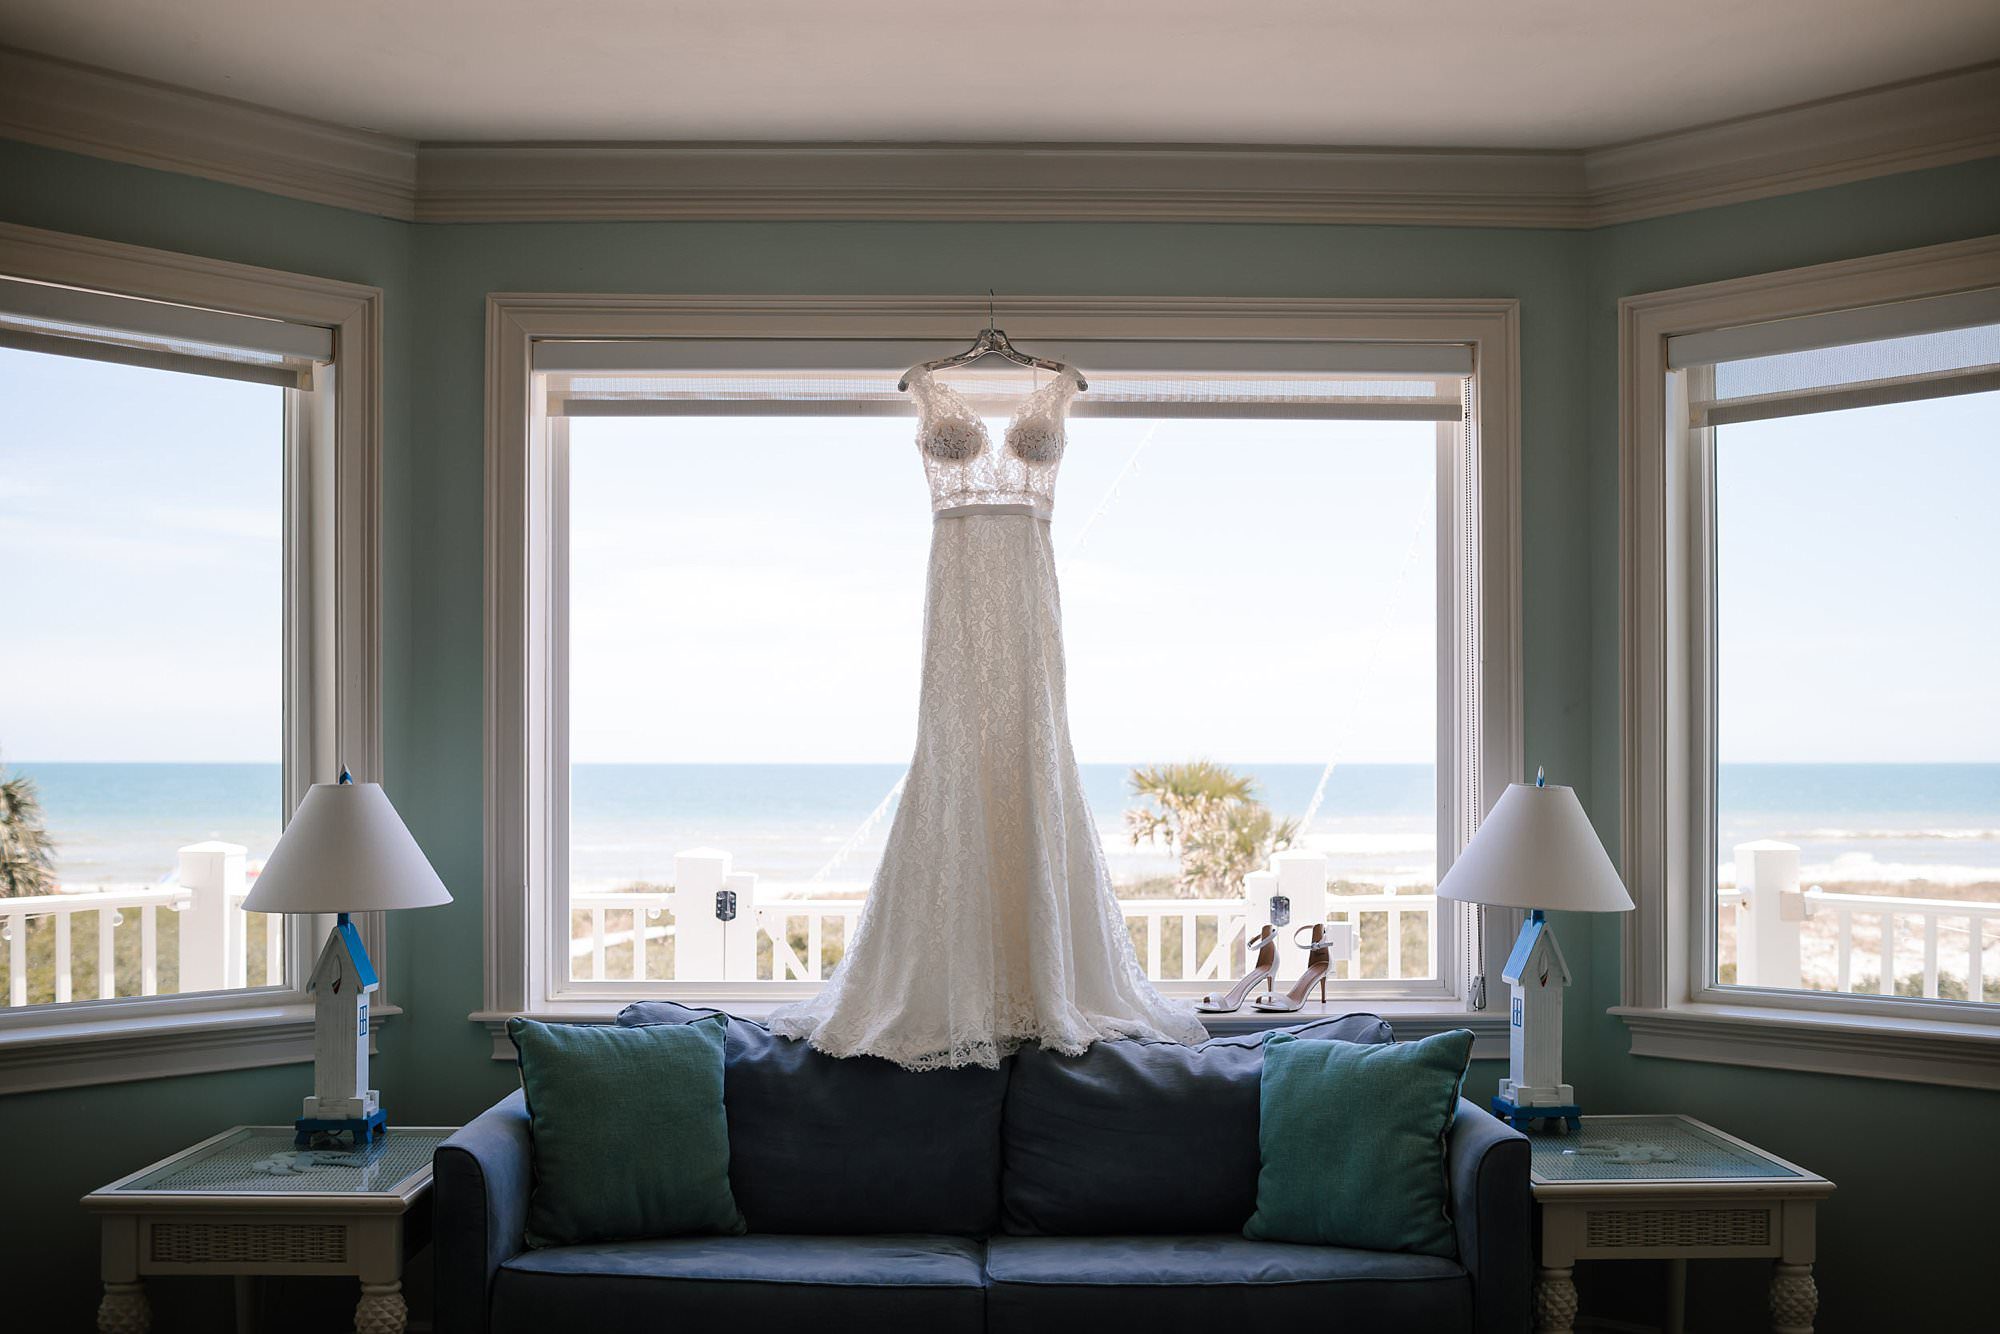 Wedding Dress hanging in window in front of beach